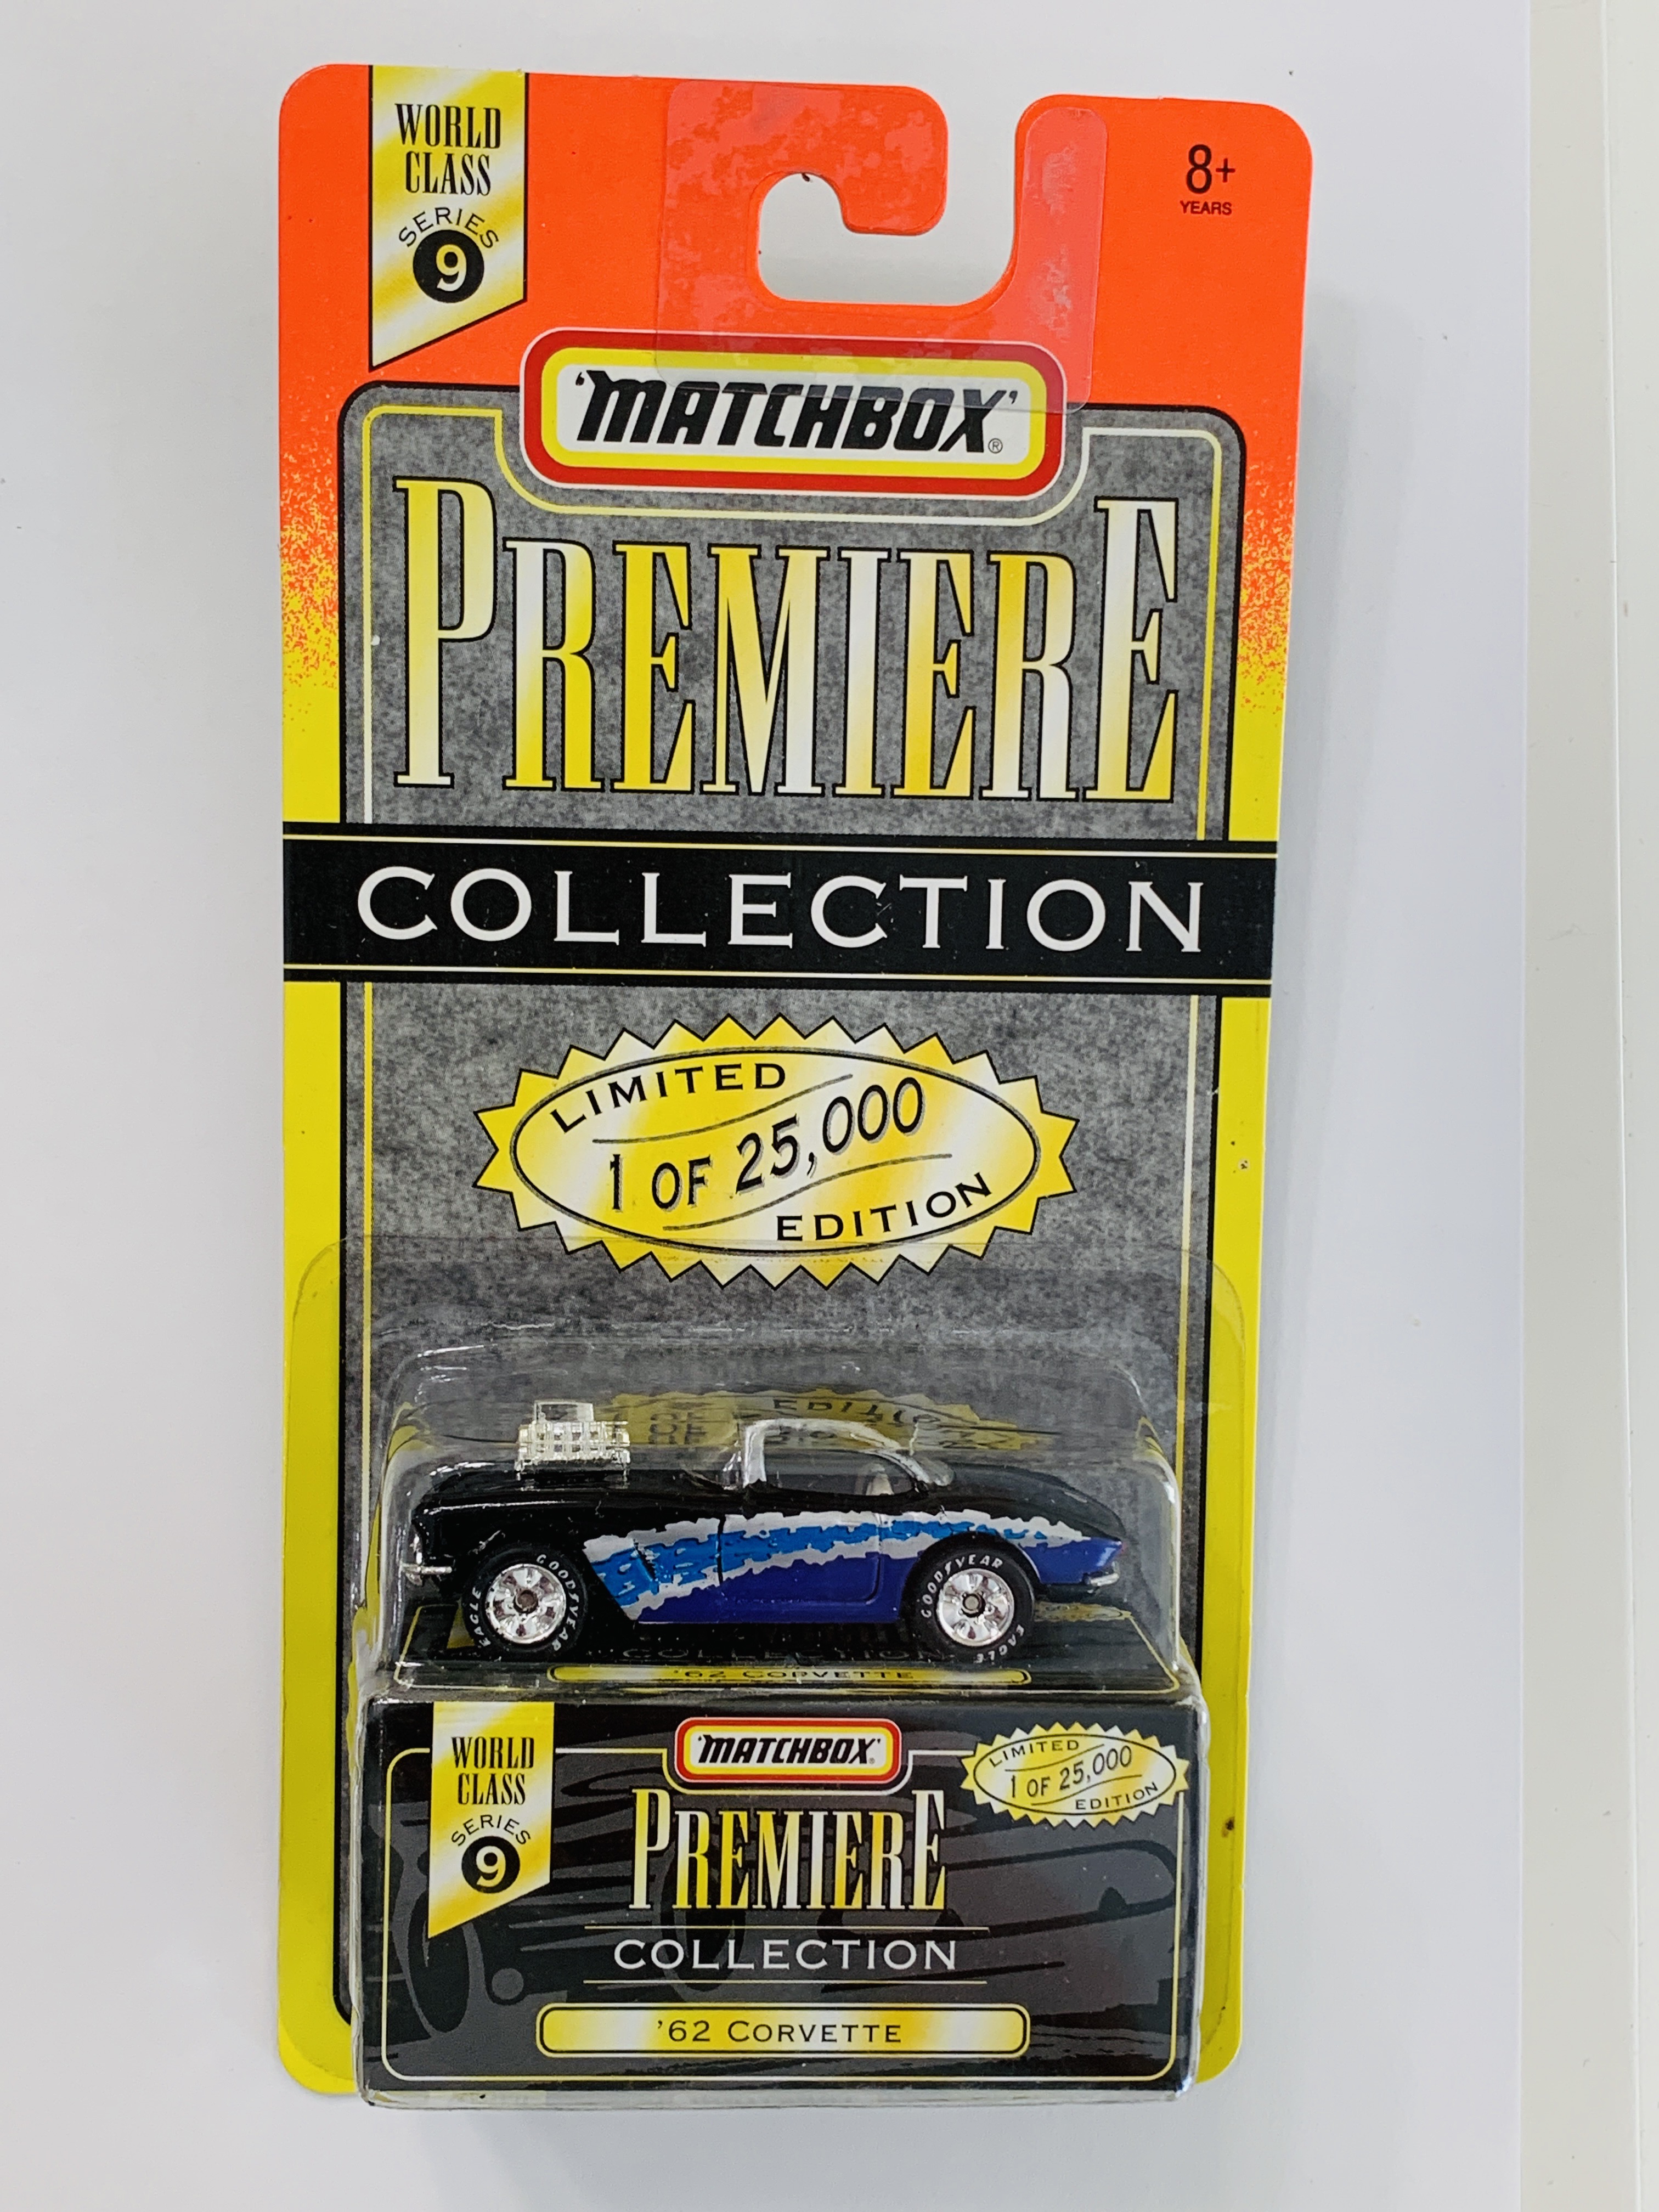 Matchbox Premiere World Class Series 9 '62 Corvette